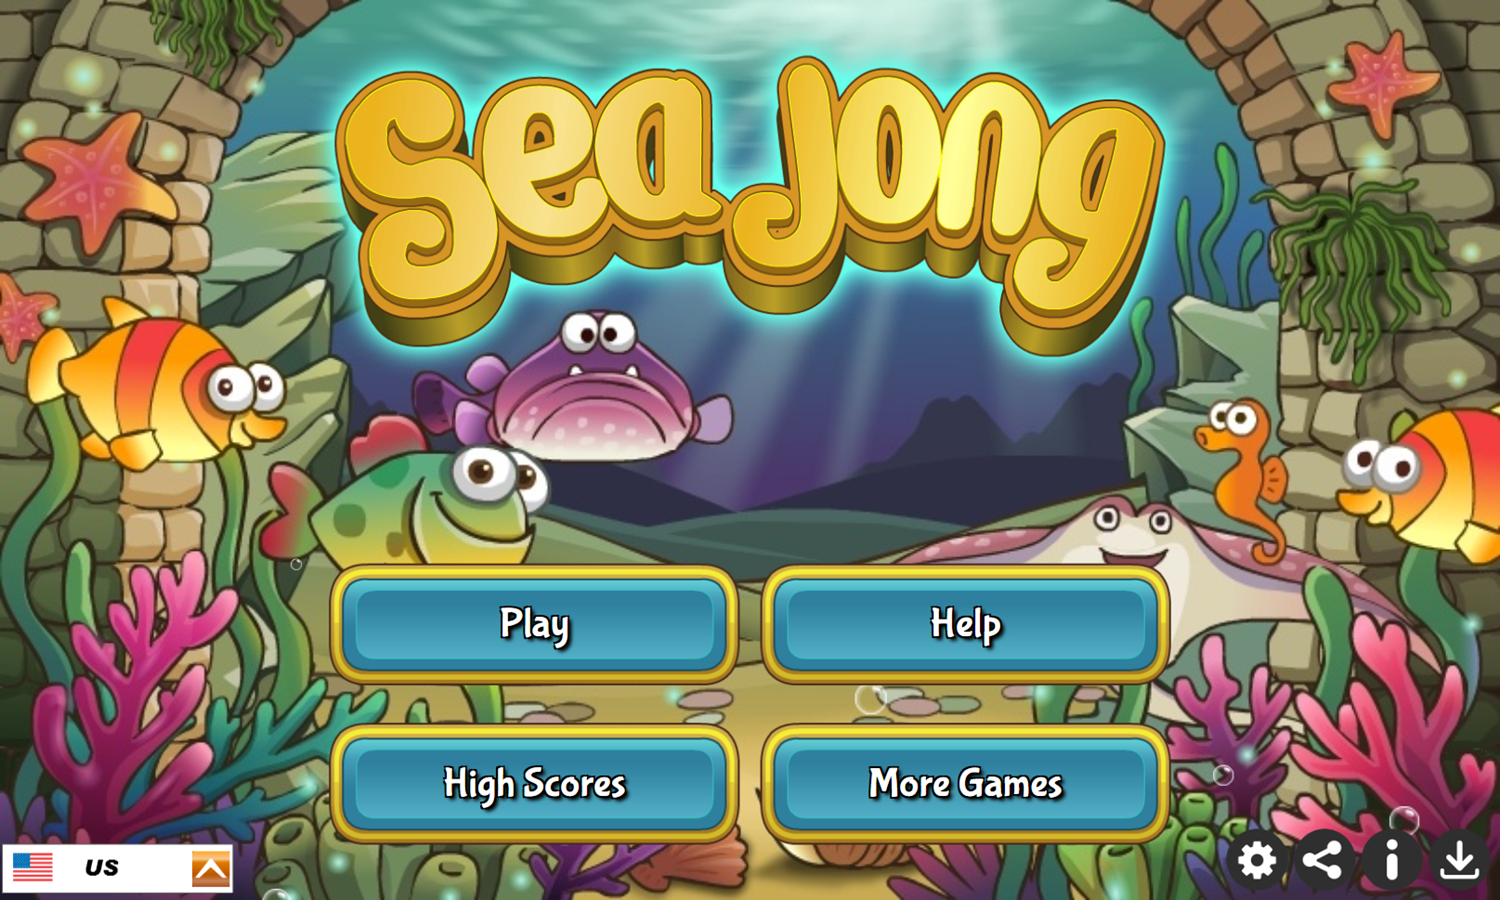 Seajong Game Welcome Screen Screenshot.